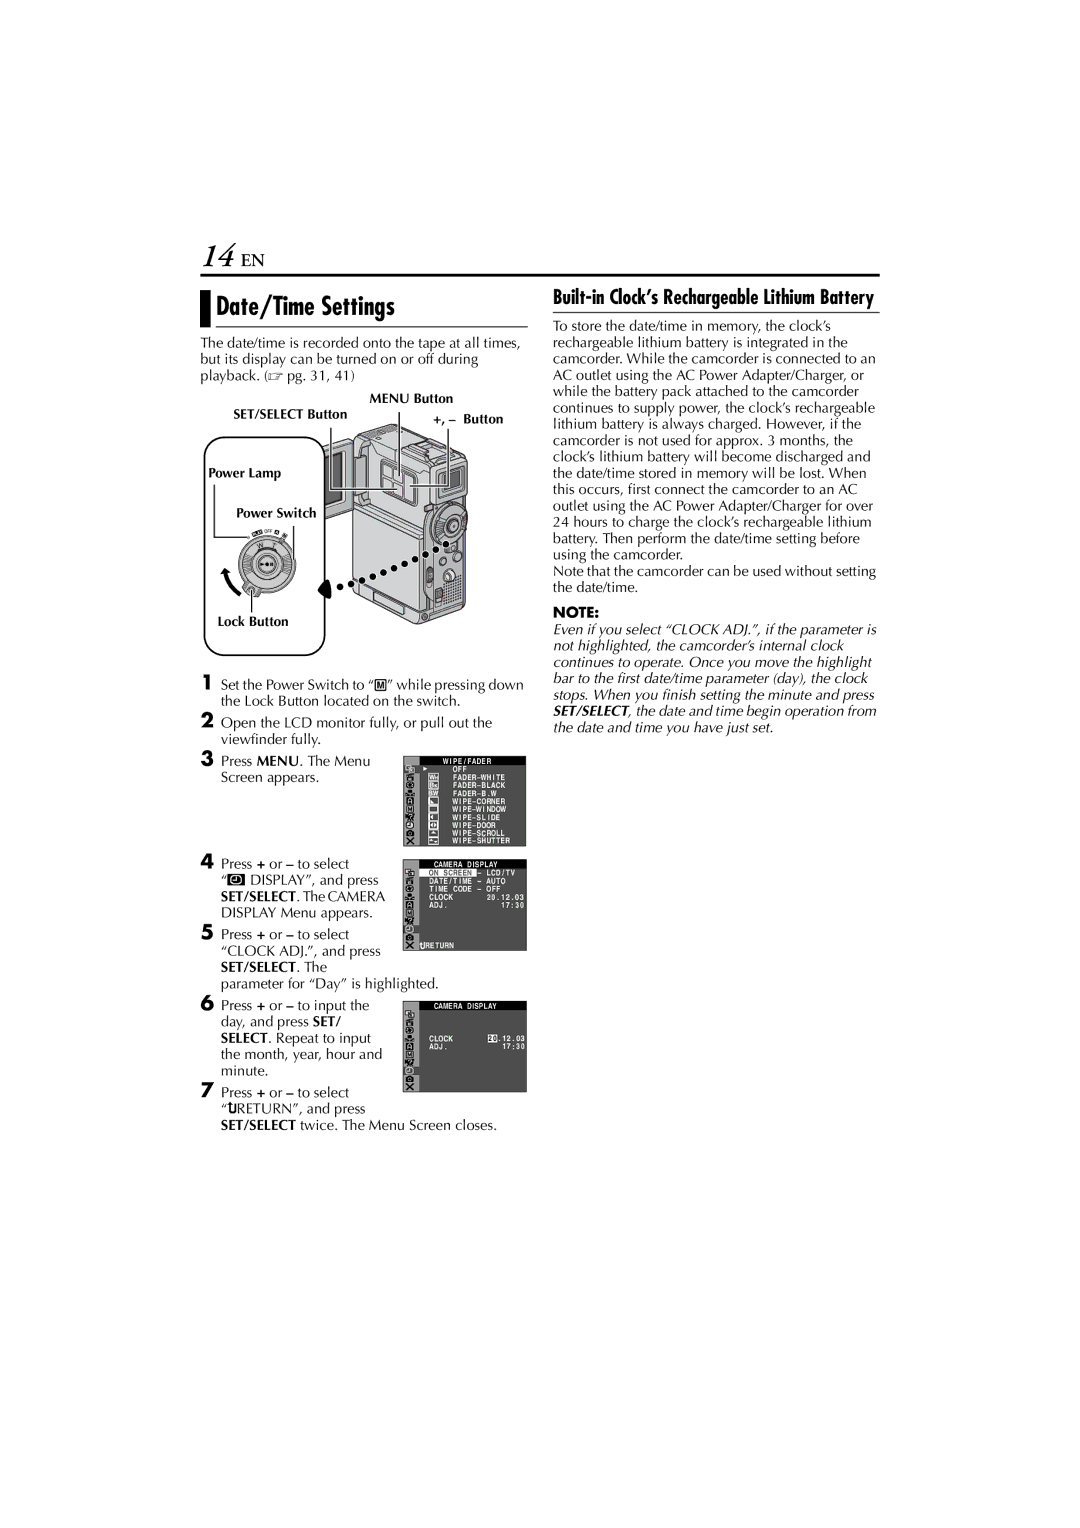 JVC LYT1147-001A manual 14 EN, Date/Time Settings 